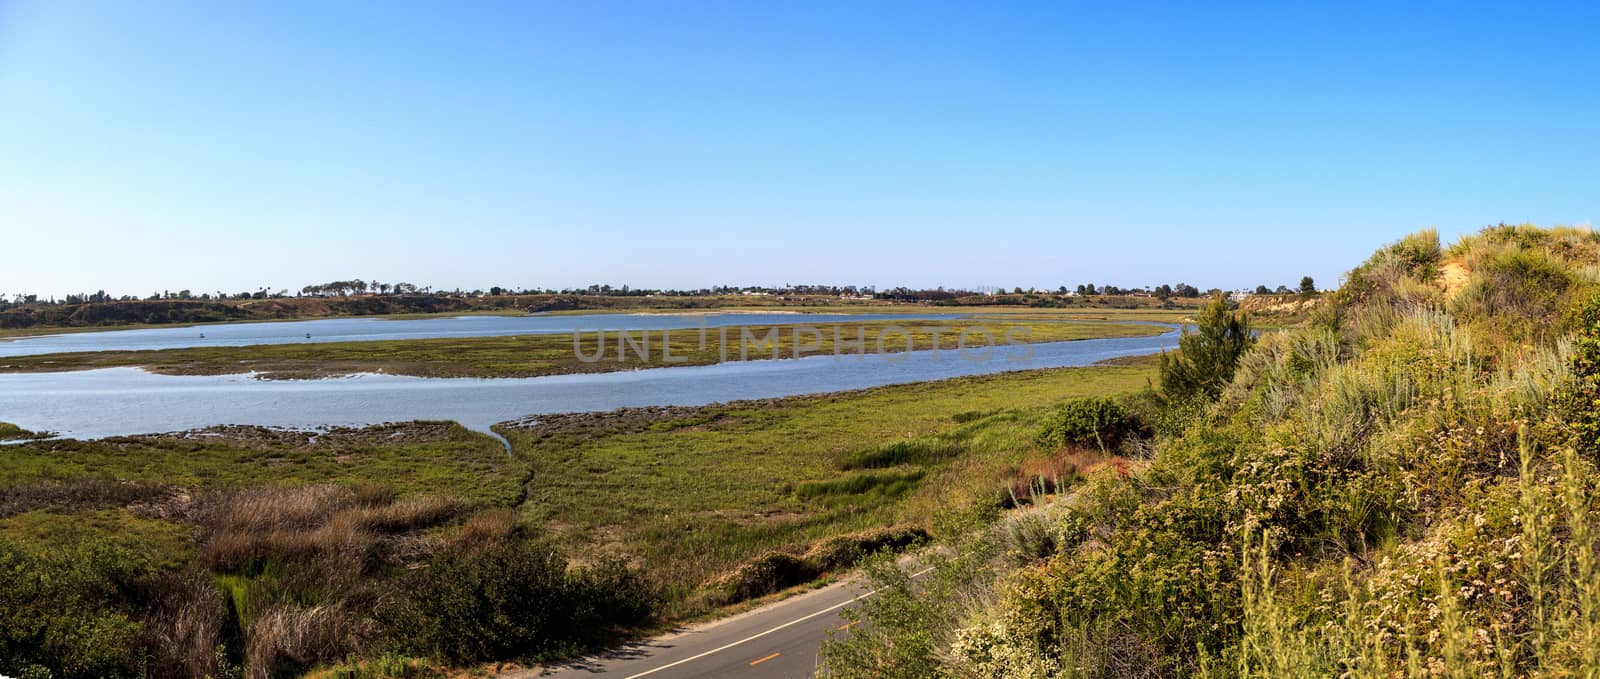 Newport Back Bay loop hiking trail winds along the marsh, where you will see wildlife in Newport Beach, California USA